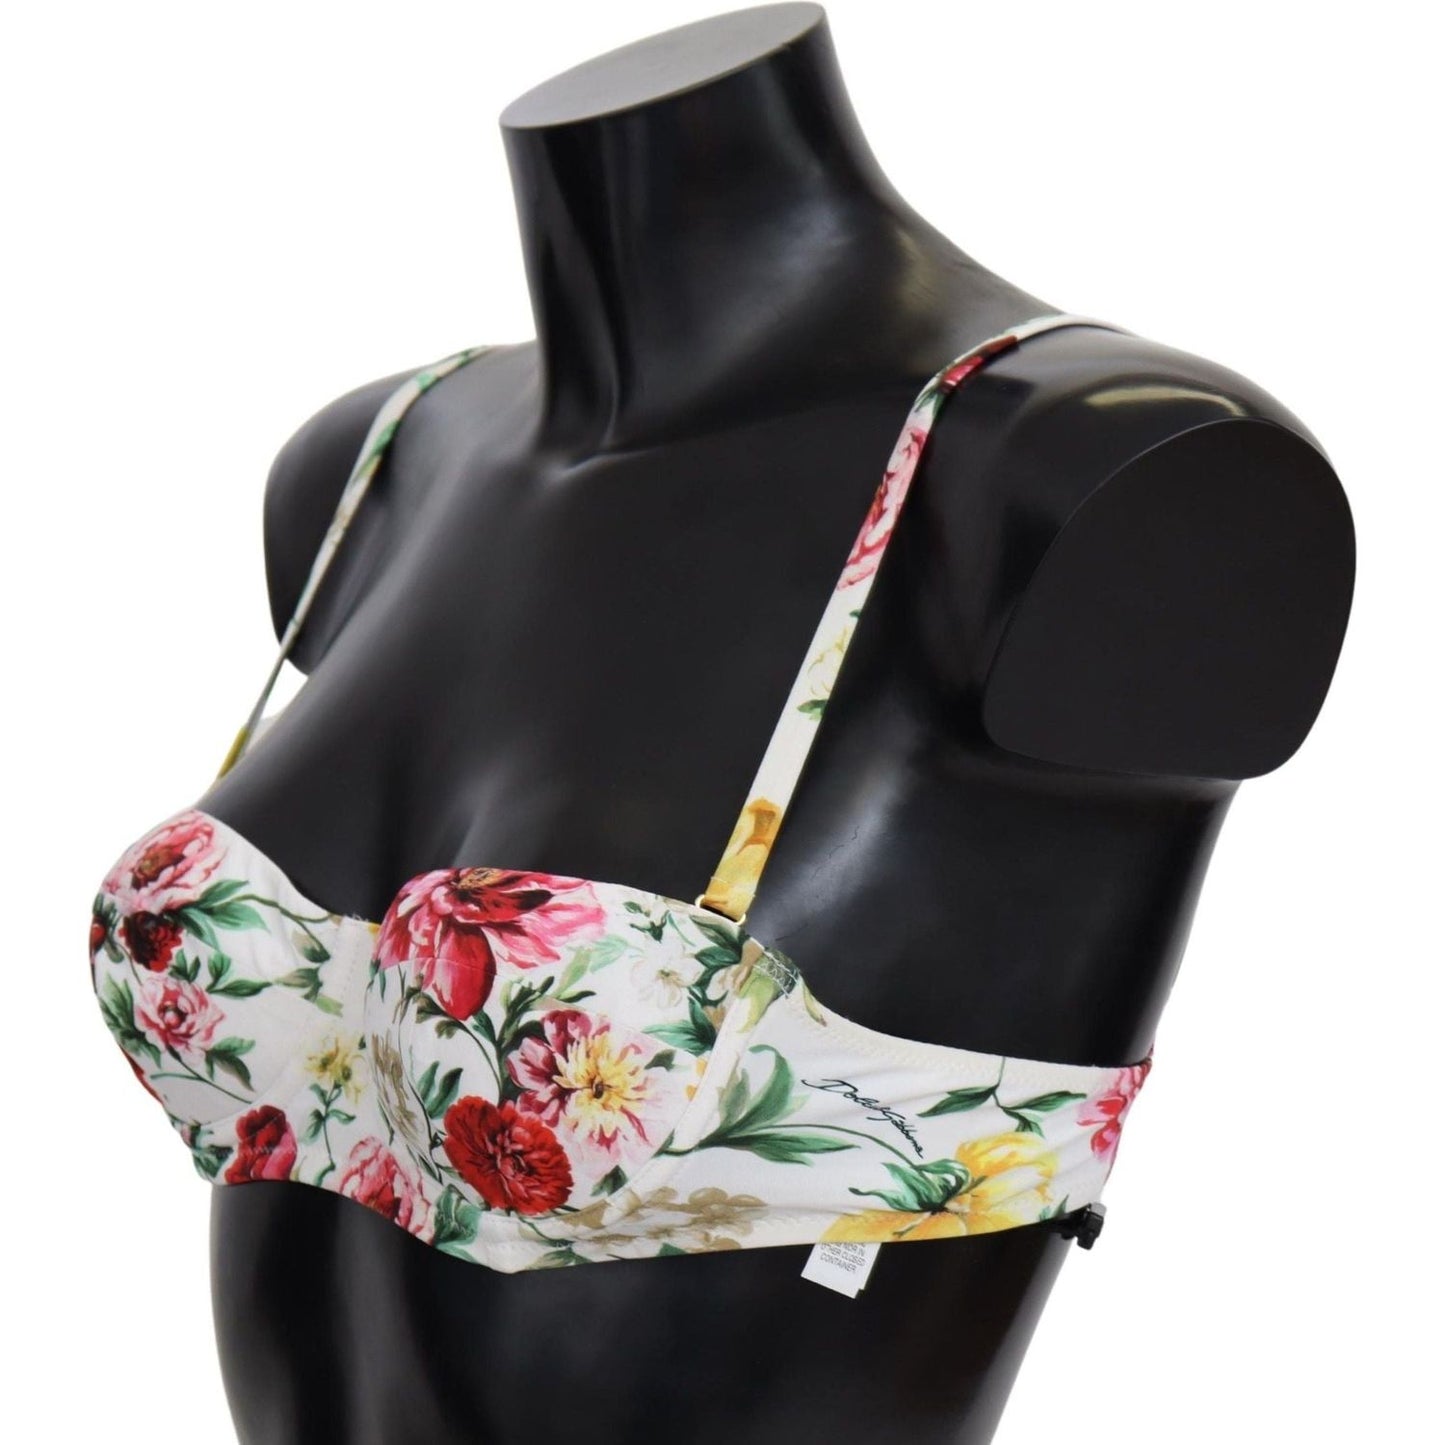 Dolce & Gabbana Elegant Floral Bikini Top – Summer Chic white-floral-print-swimsuit-beachwear-bikini-tops